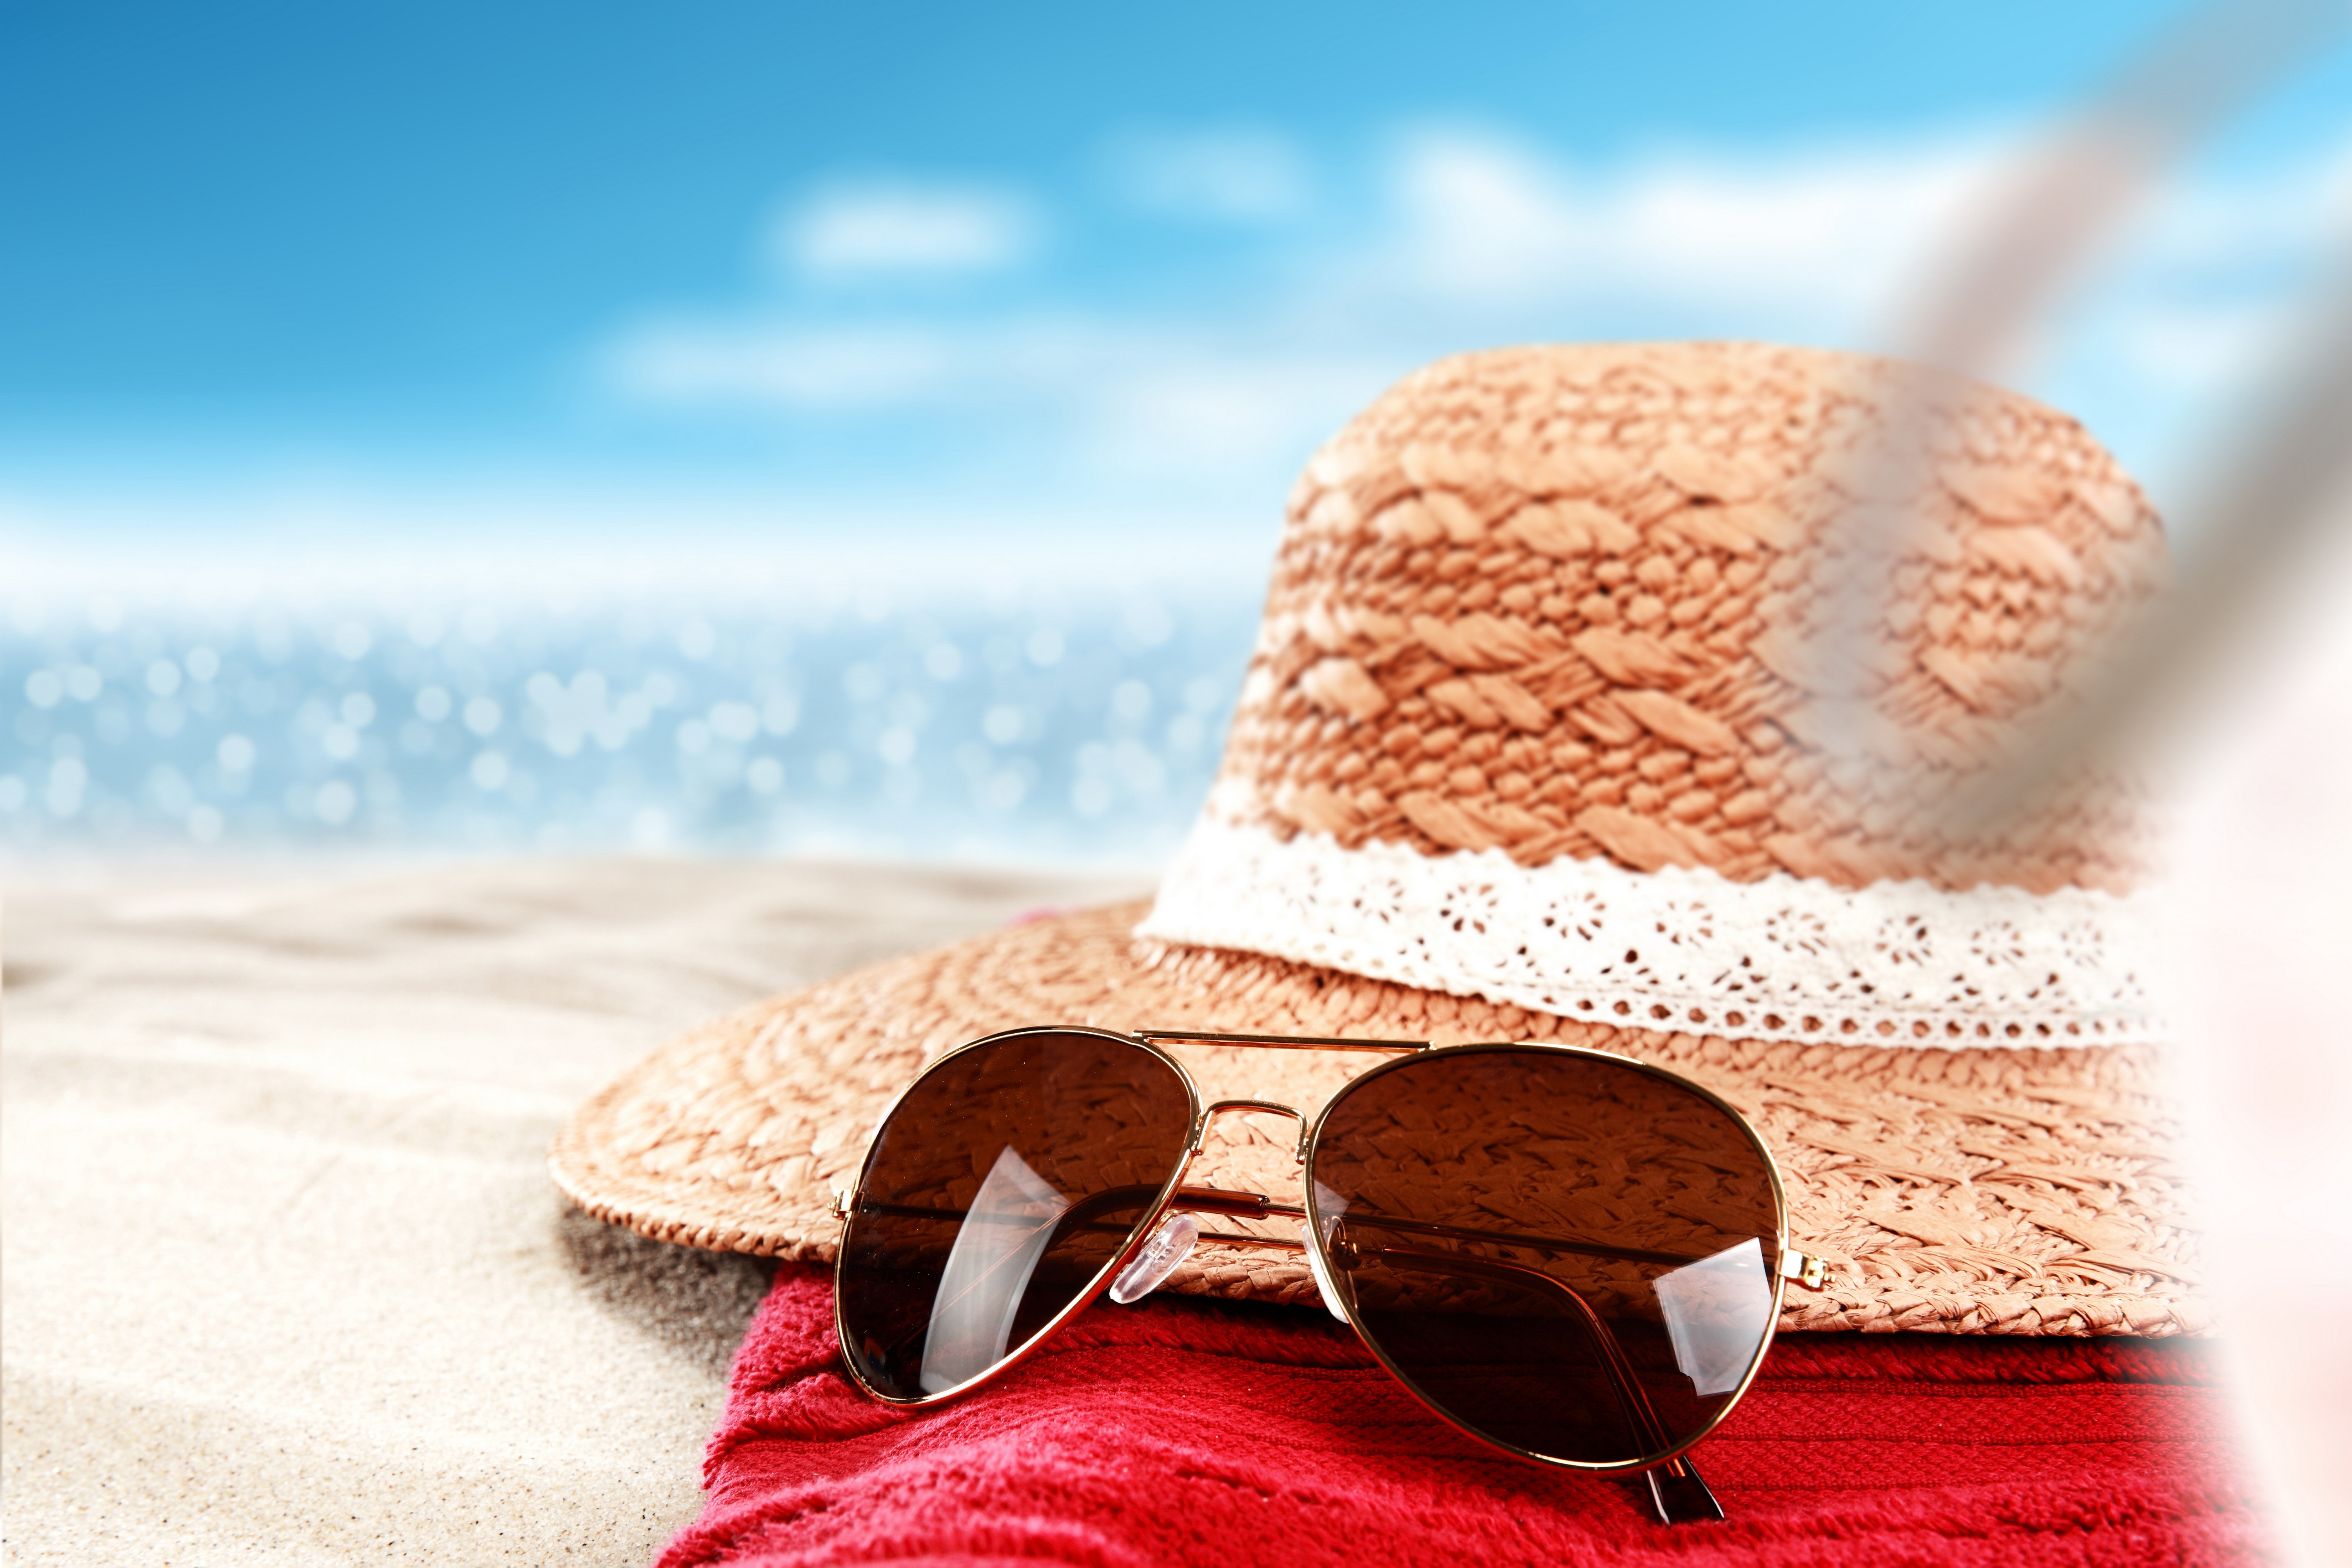 Шляпа на пляже. Солнечные очки на пляже. Солнечные очки на песке. Летние очки. Шляпа на море.